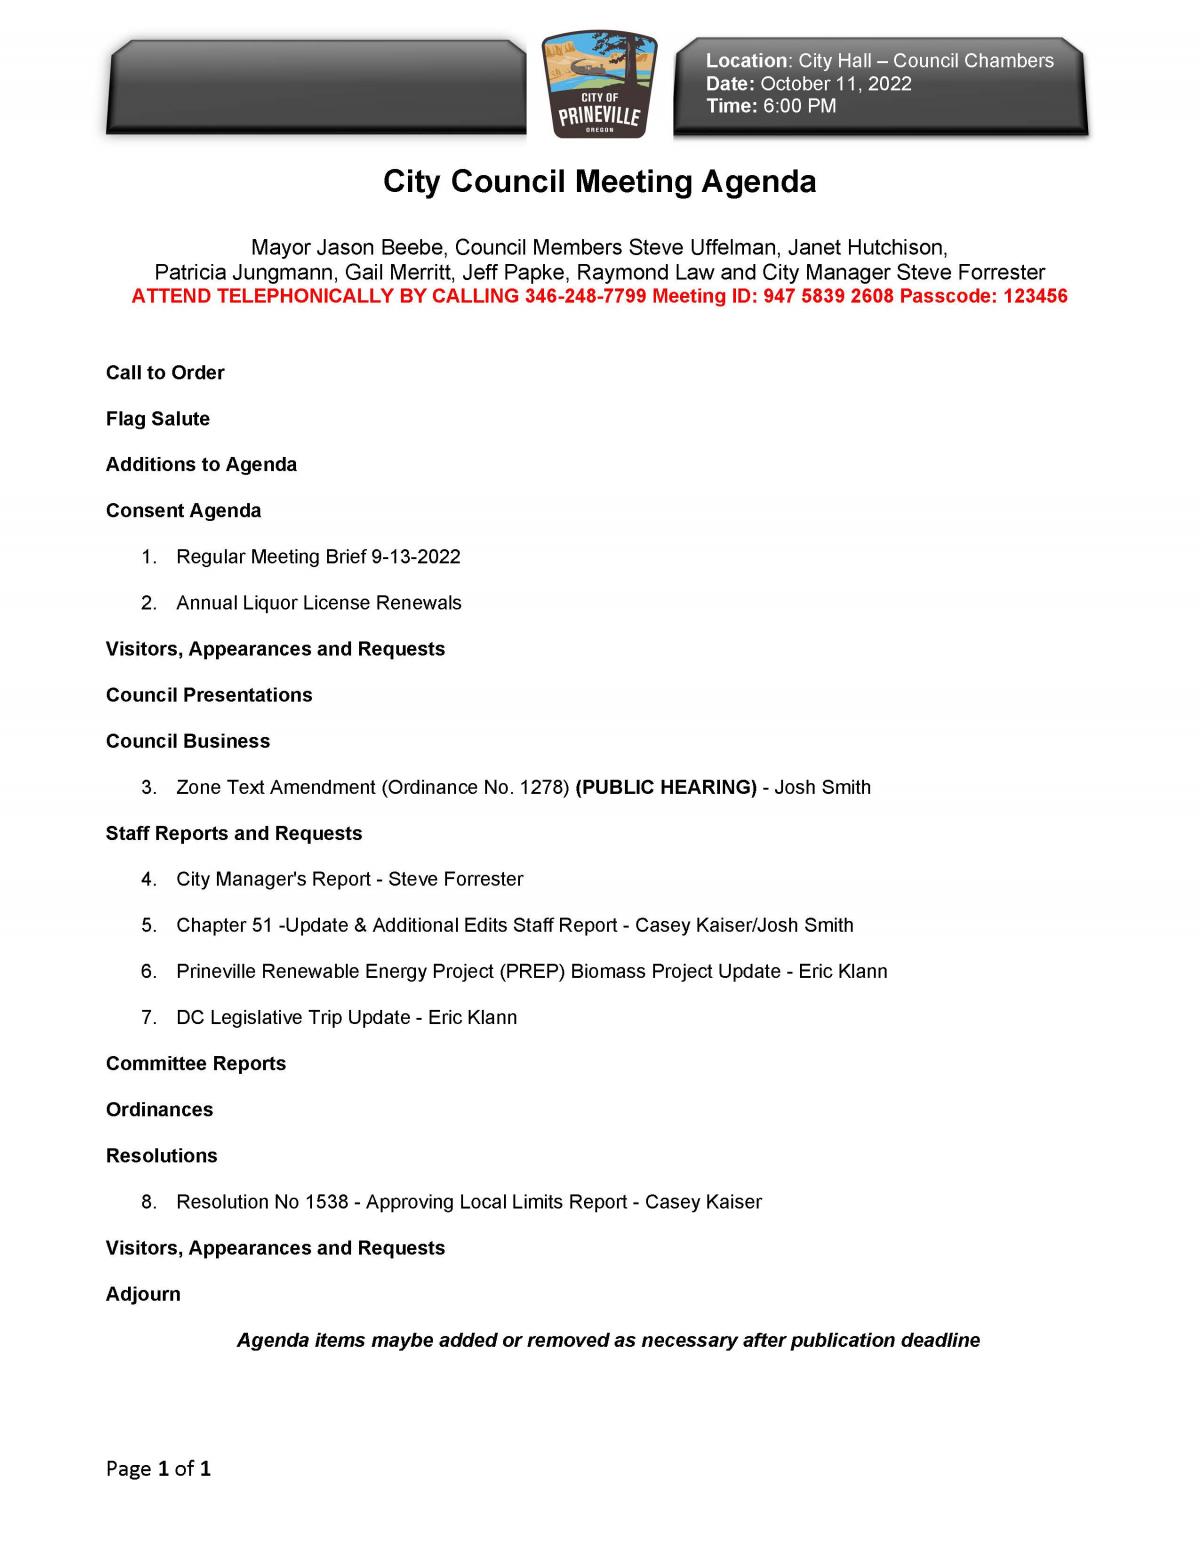 Council Agenda 10-11-2022